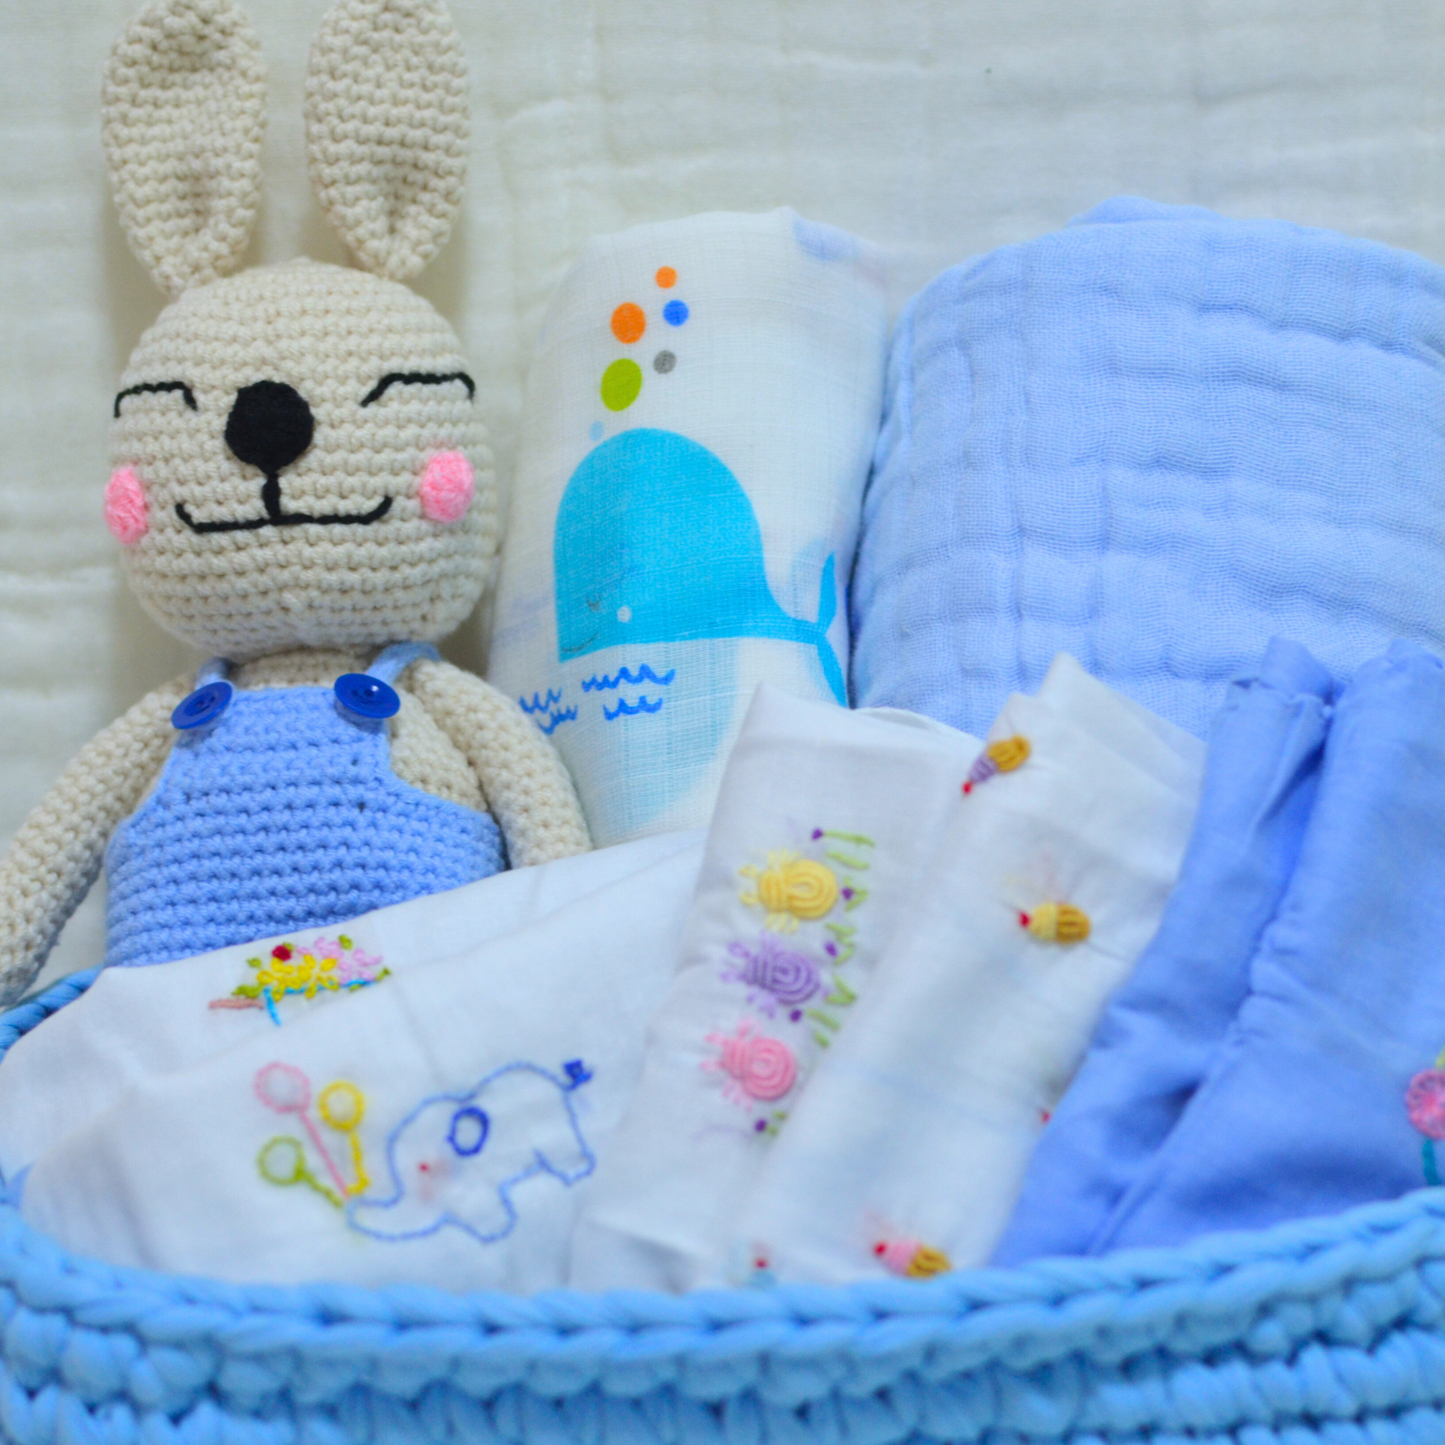 Crochet Basket Baby Hamper Gift - Blue